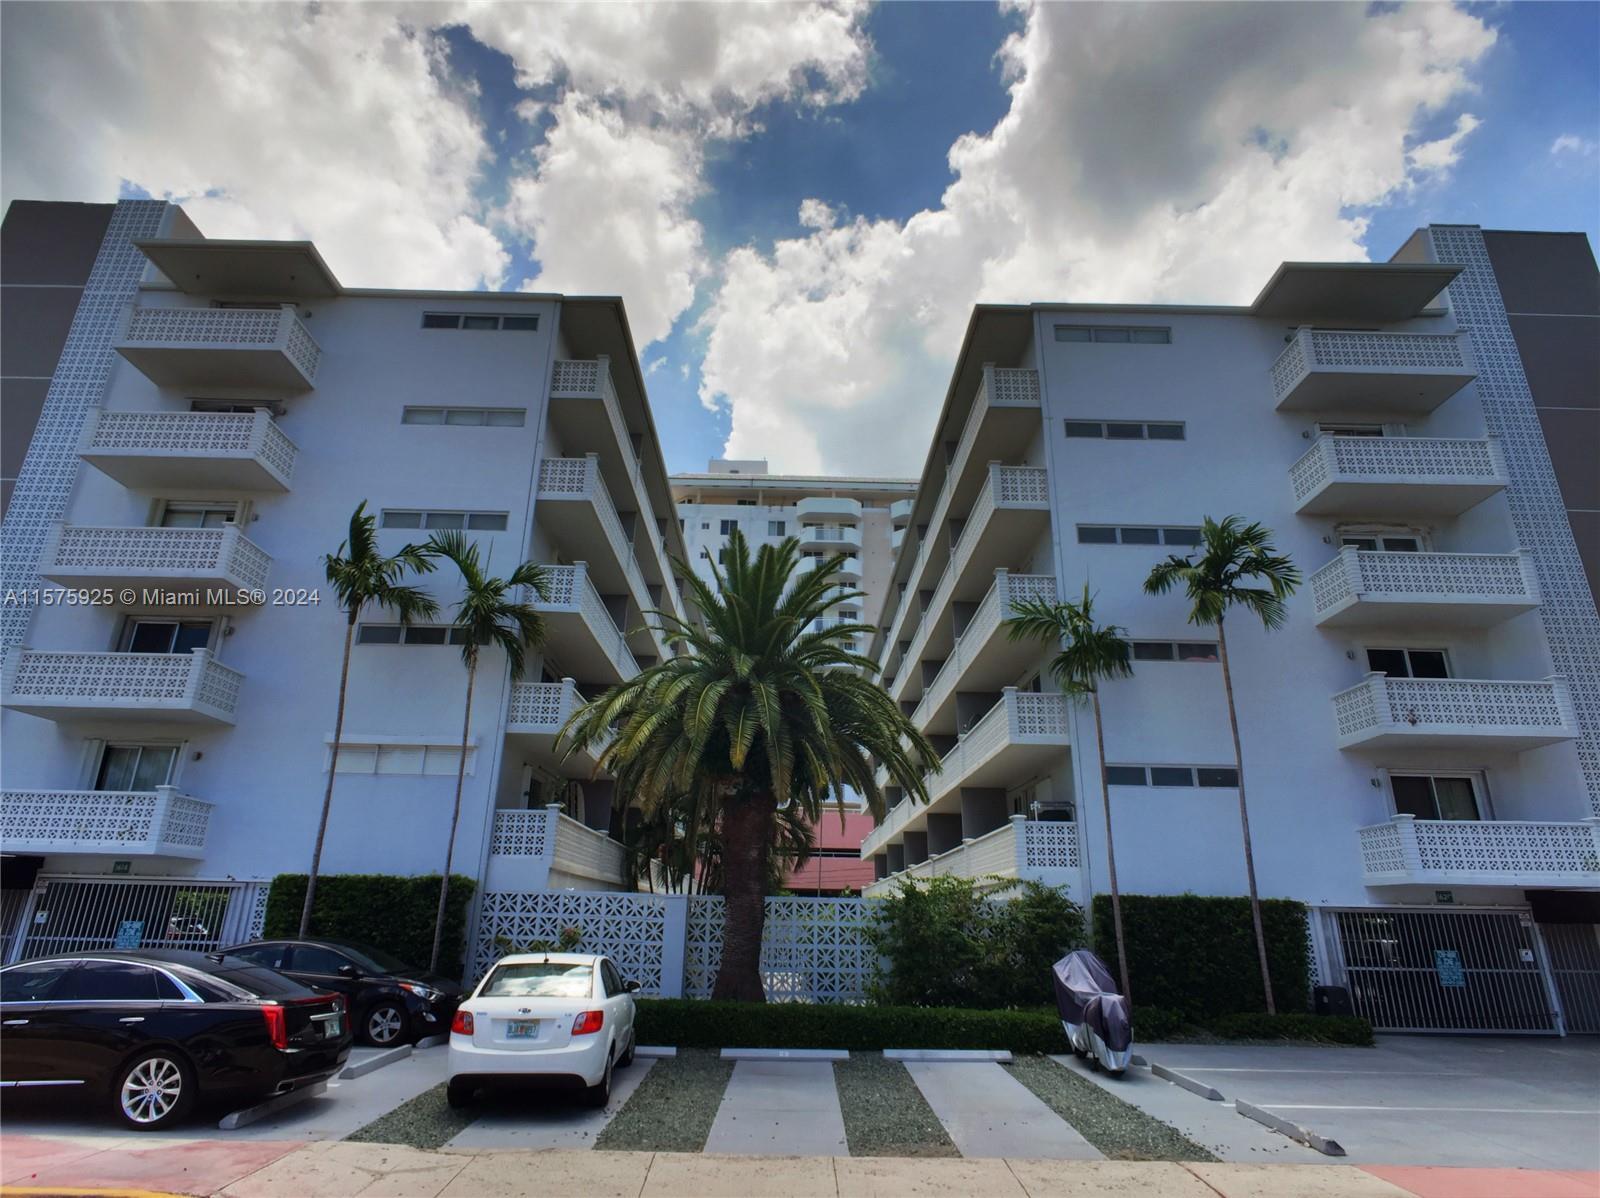 Photo of 1620 West Ave #603 in Miami Beach, FL